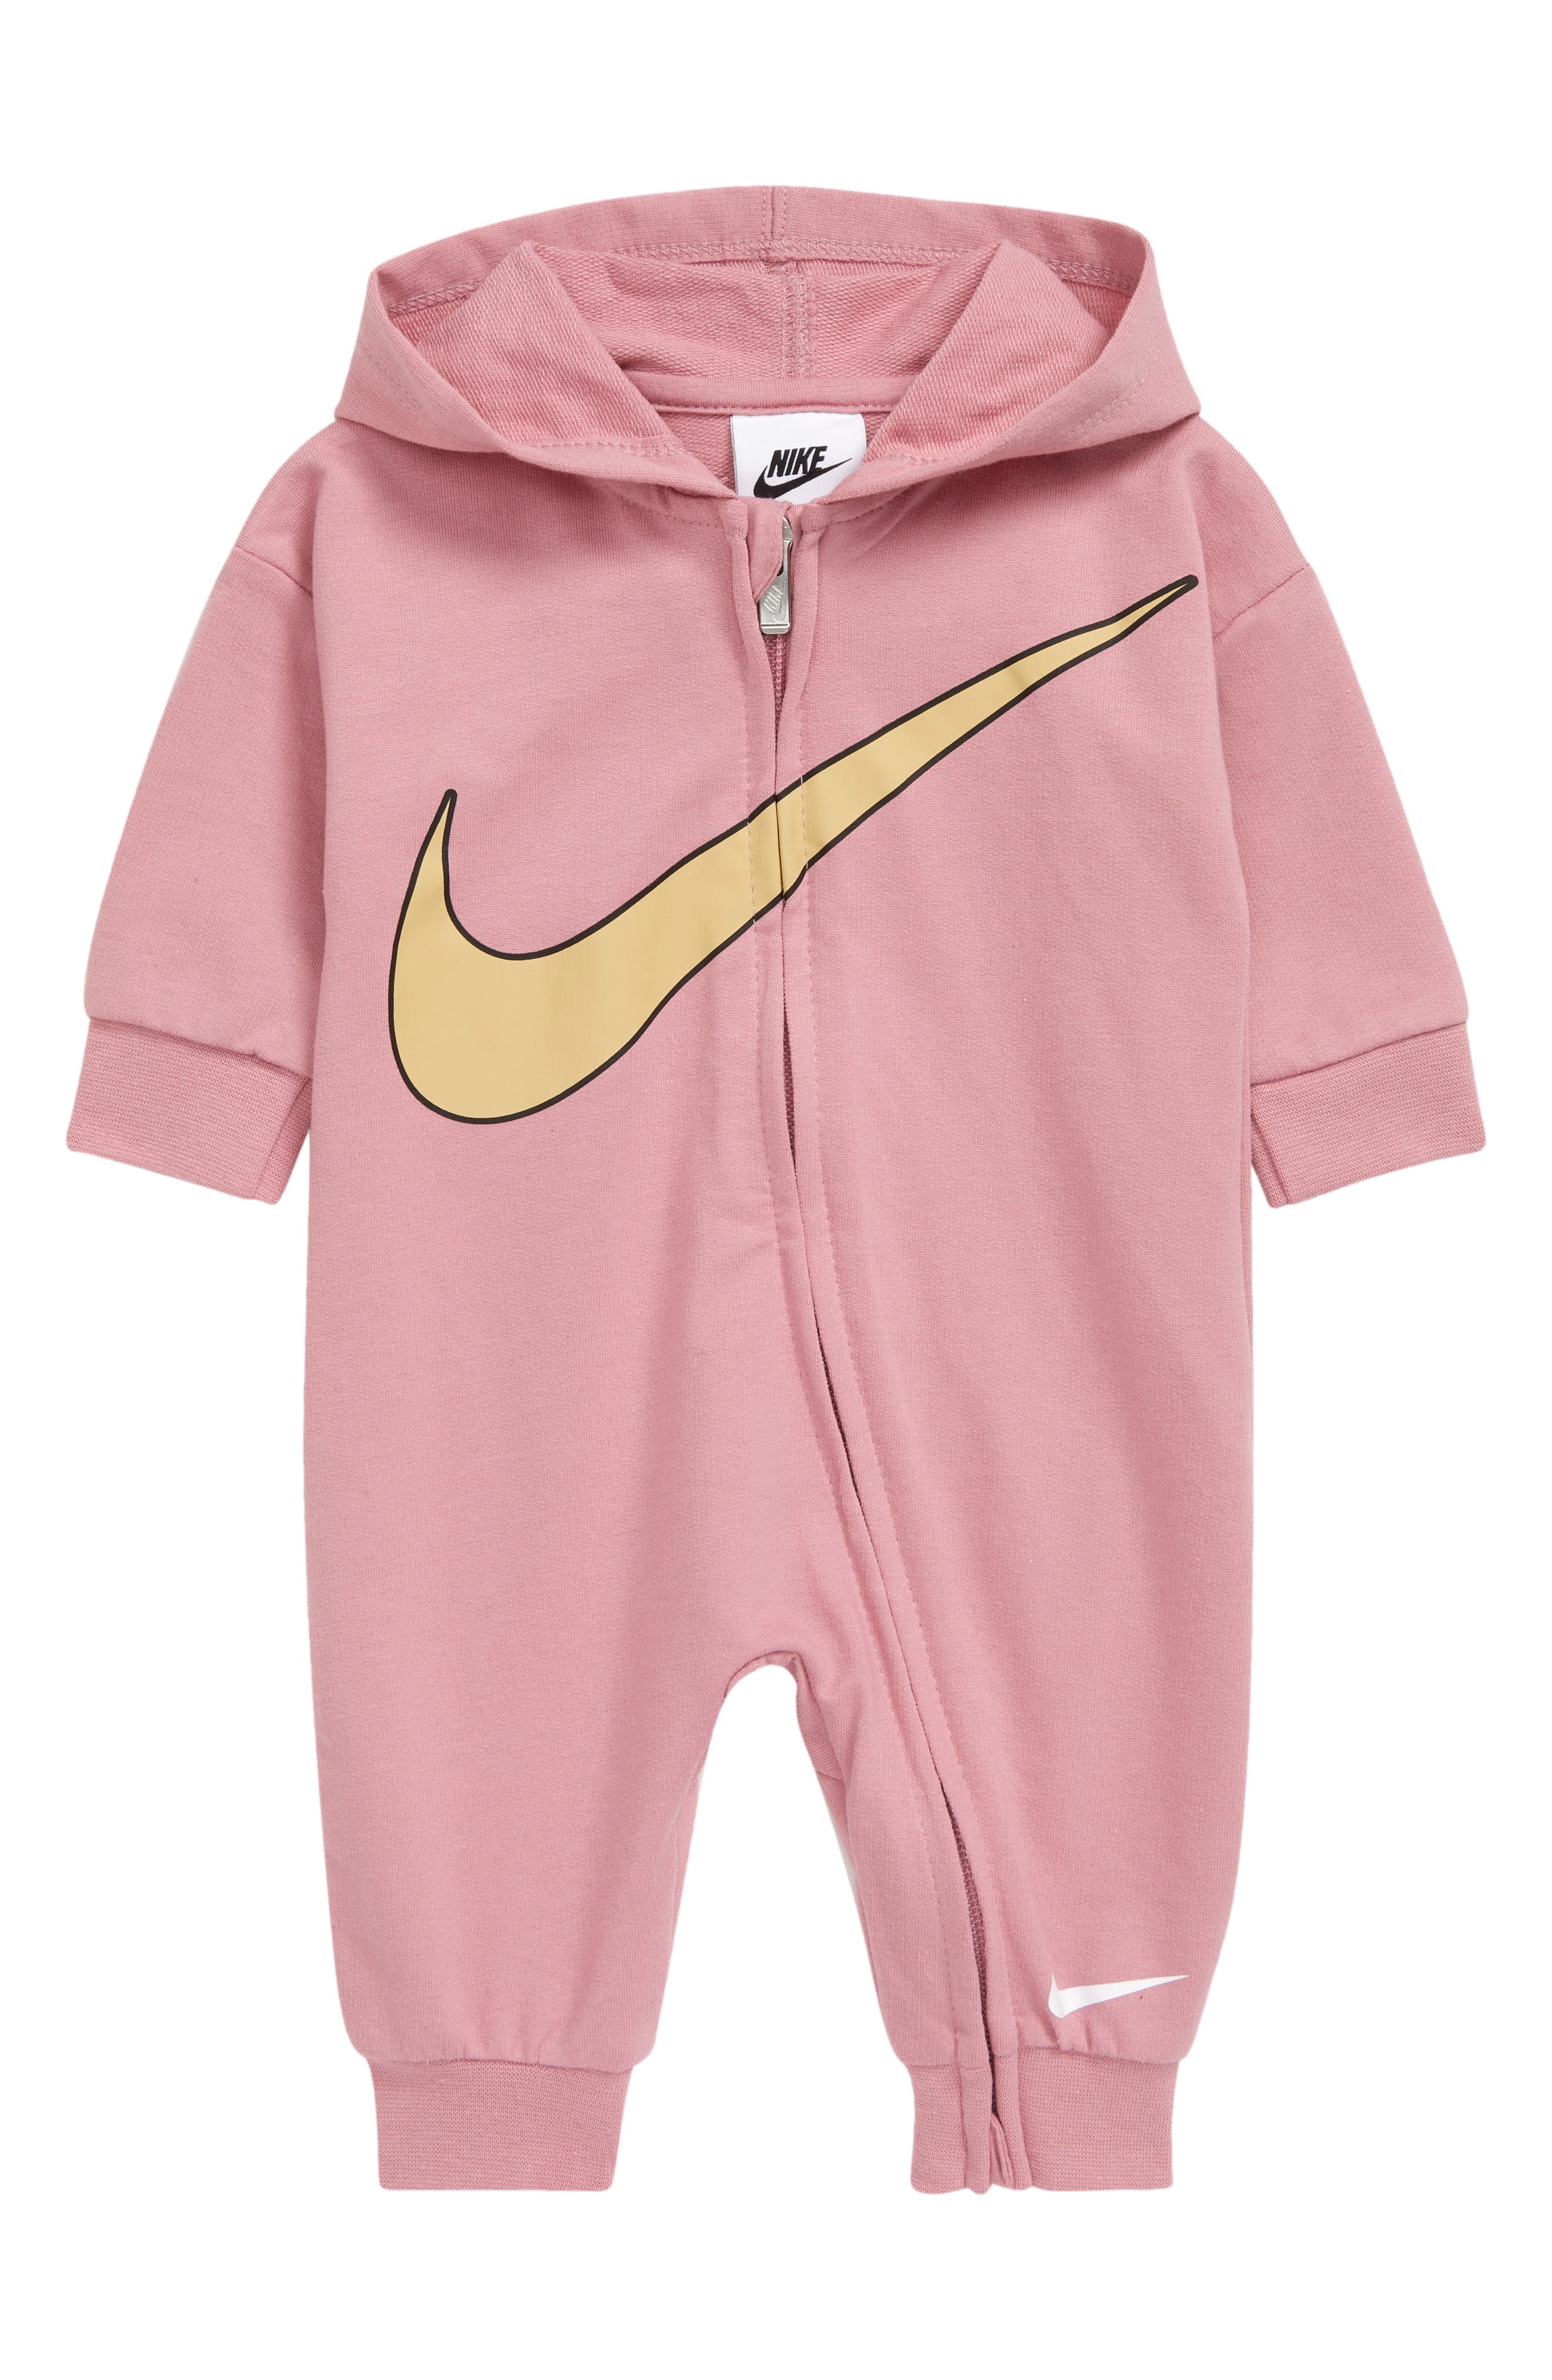 Baby Girl Nike Clothing: Dresses 